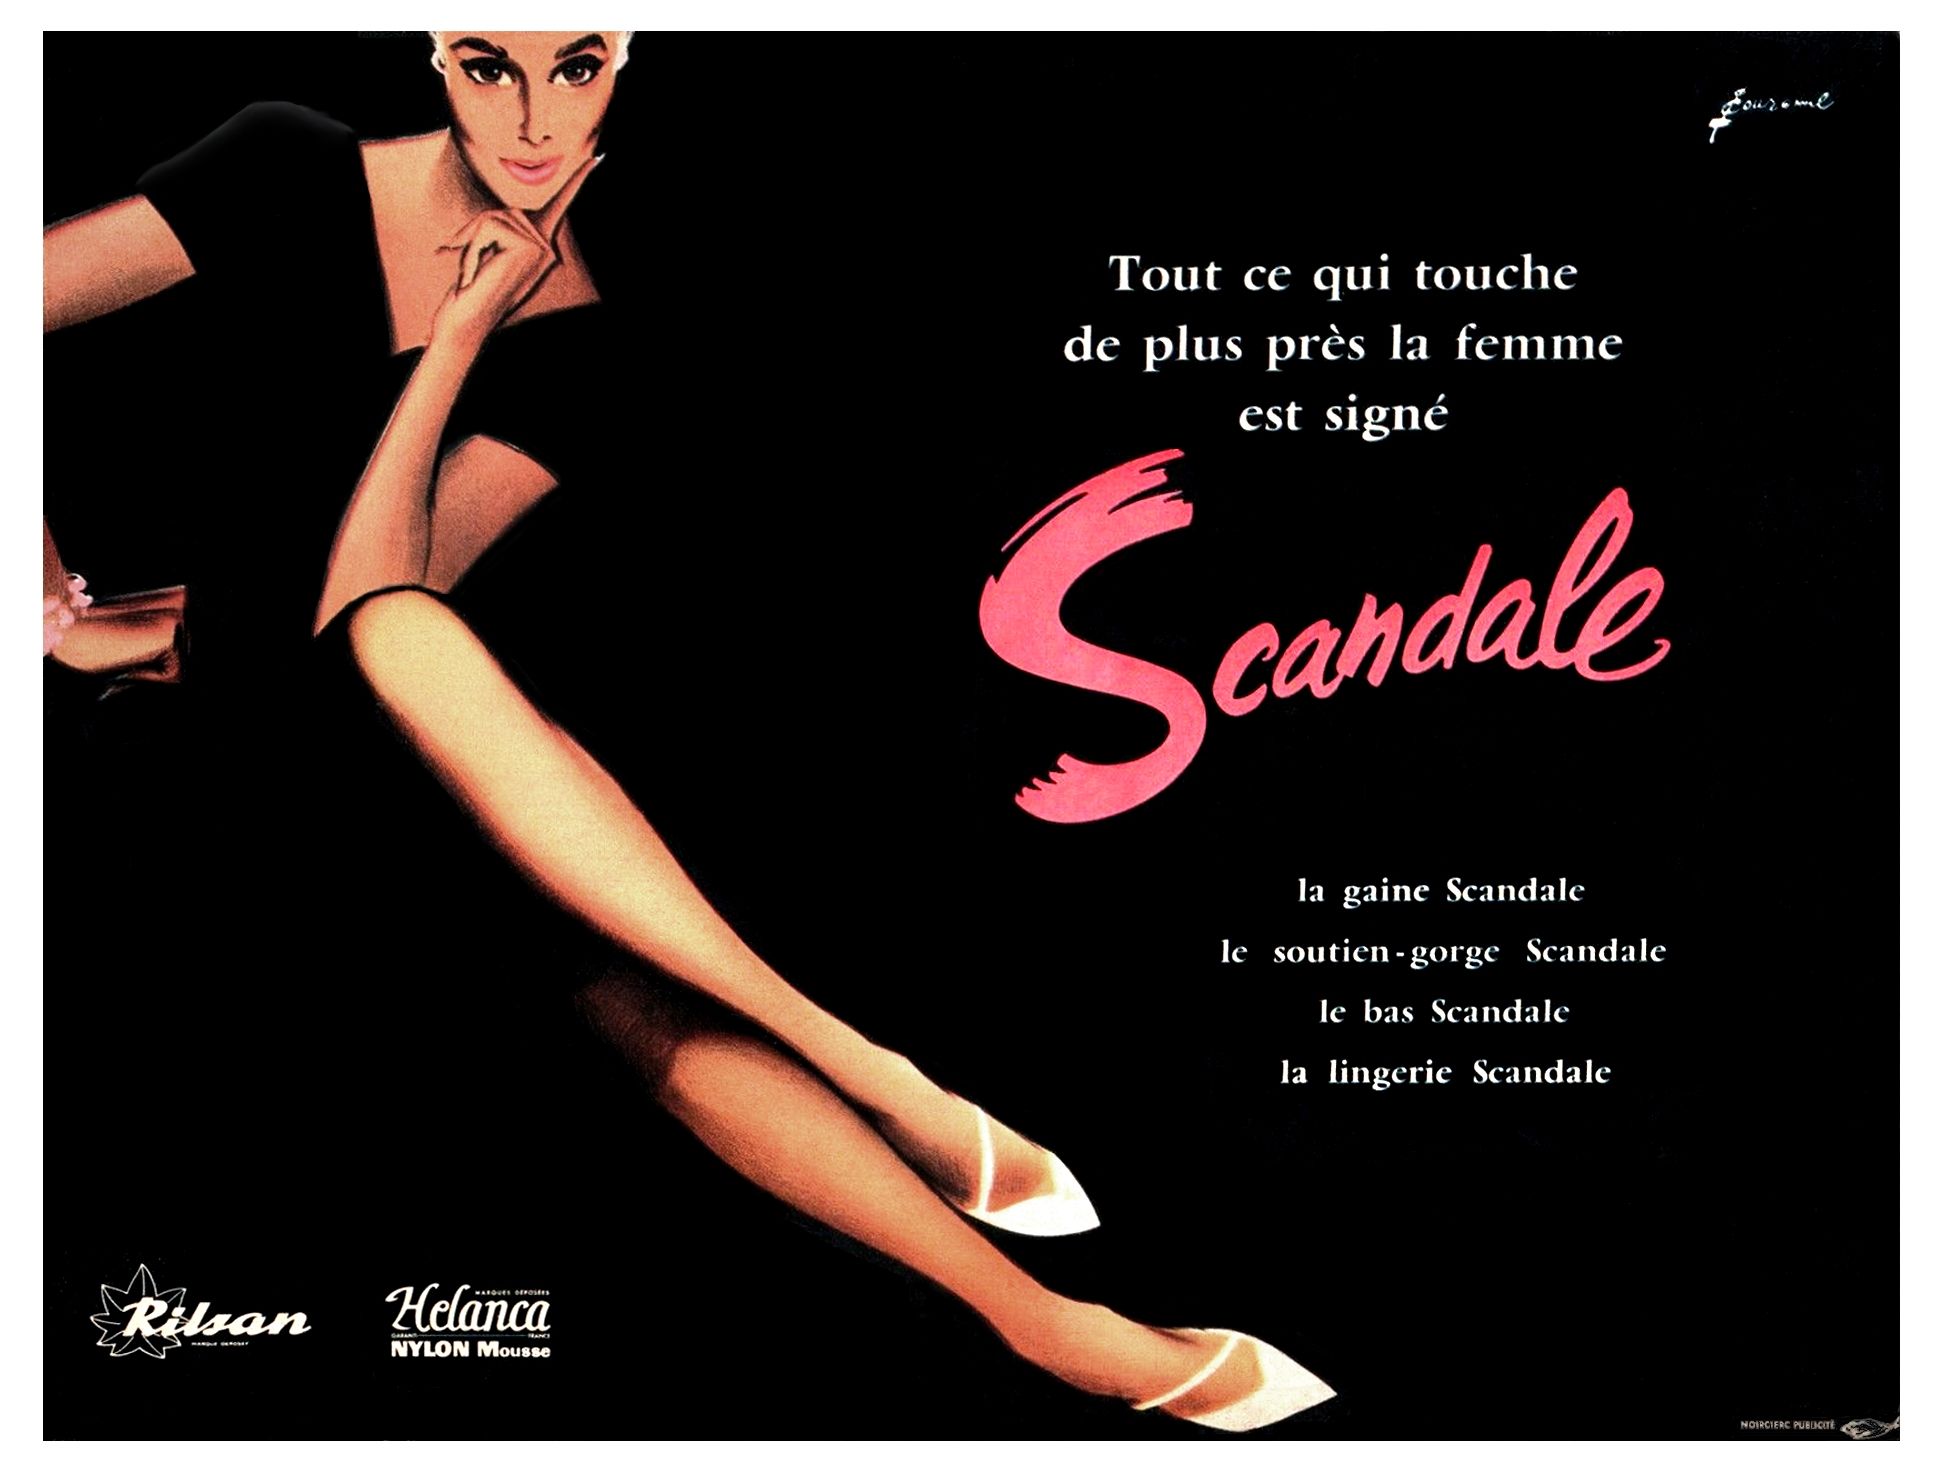 Scandale 1962 Pierre Couronne 0